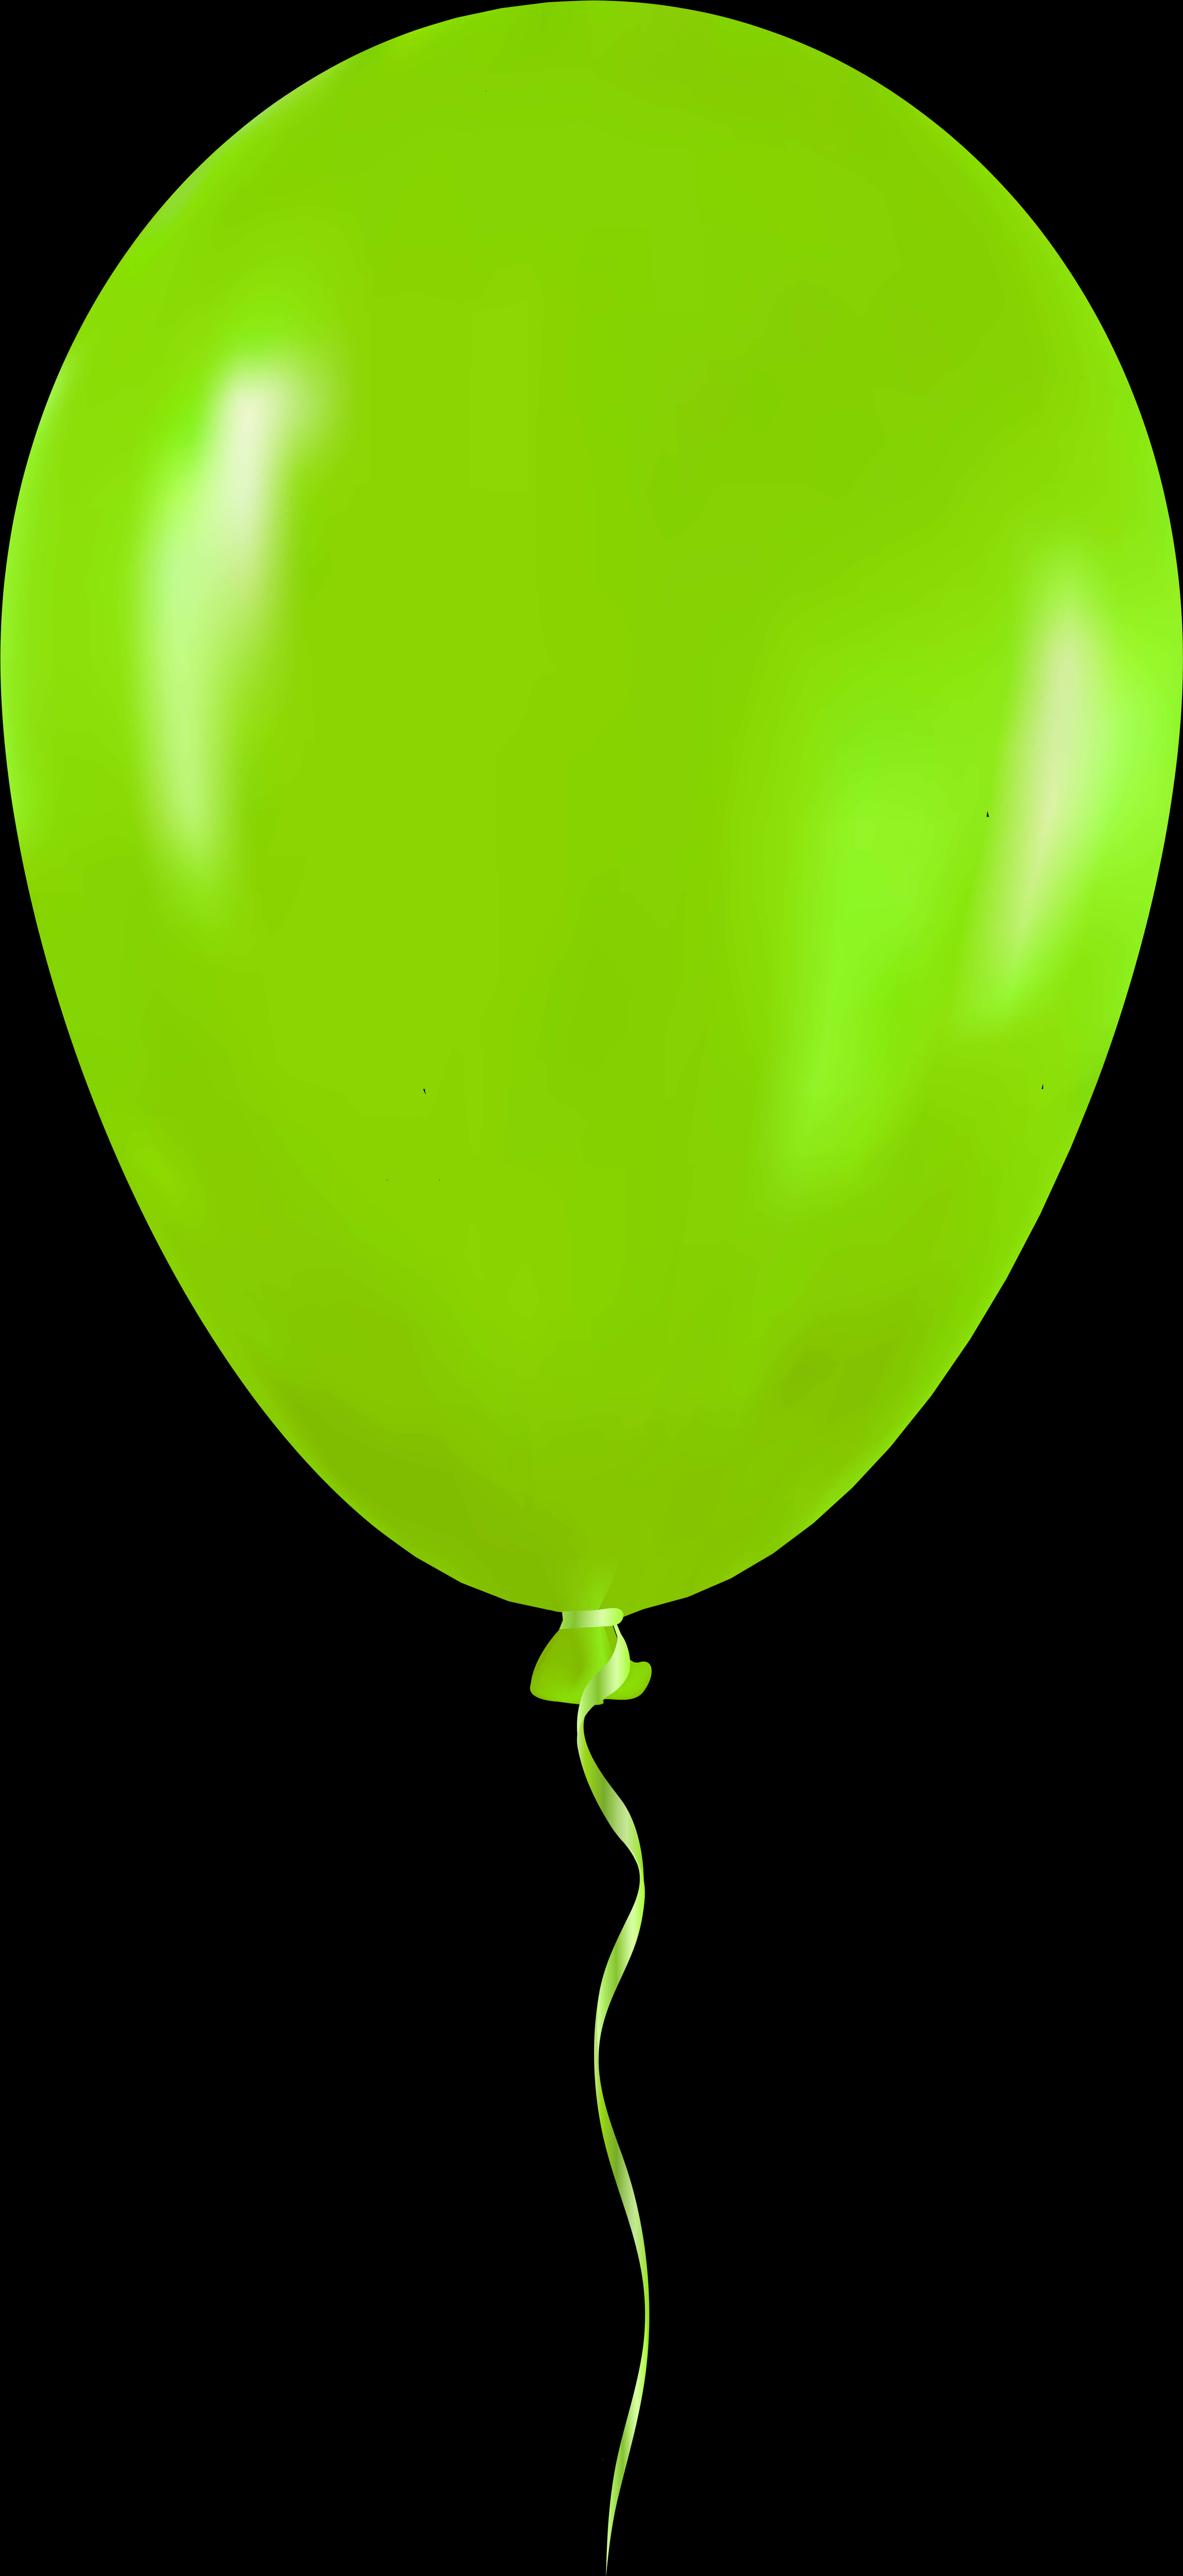 A Green Balloon With A String